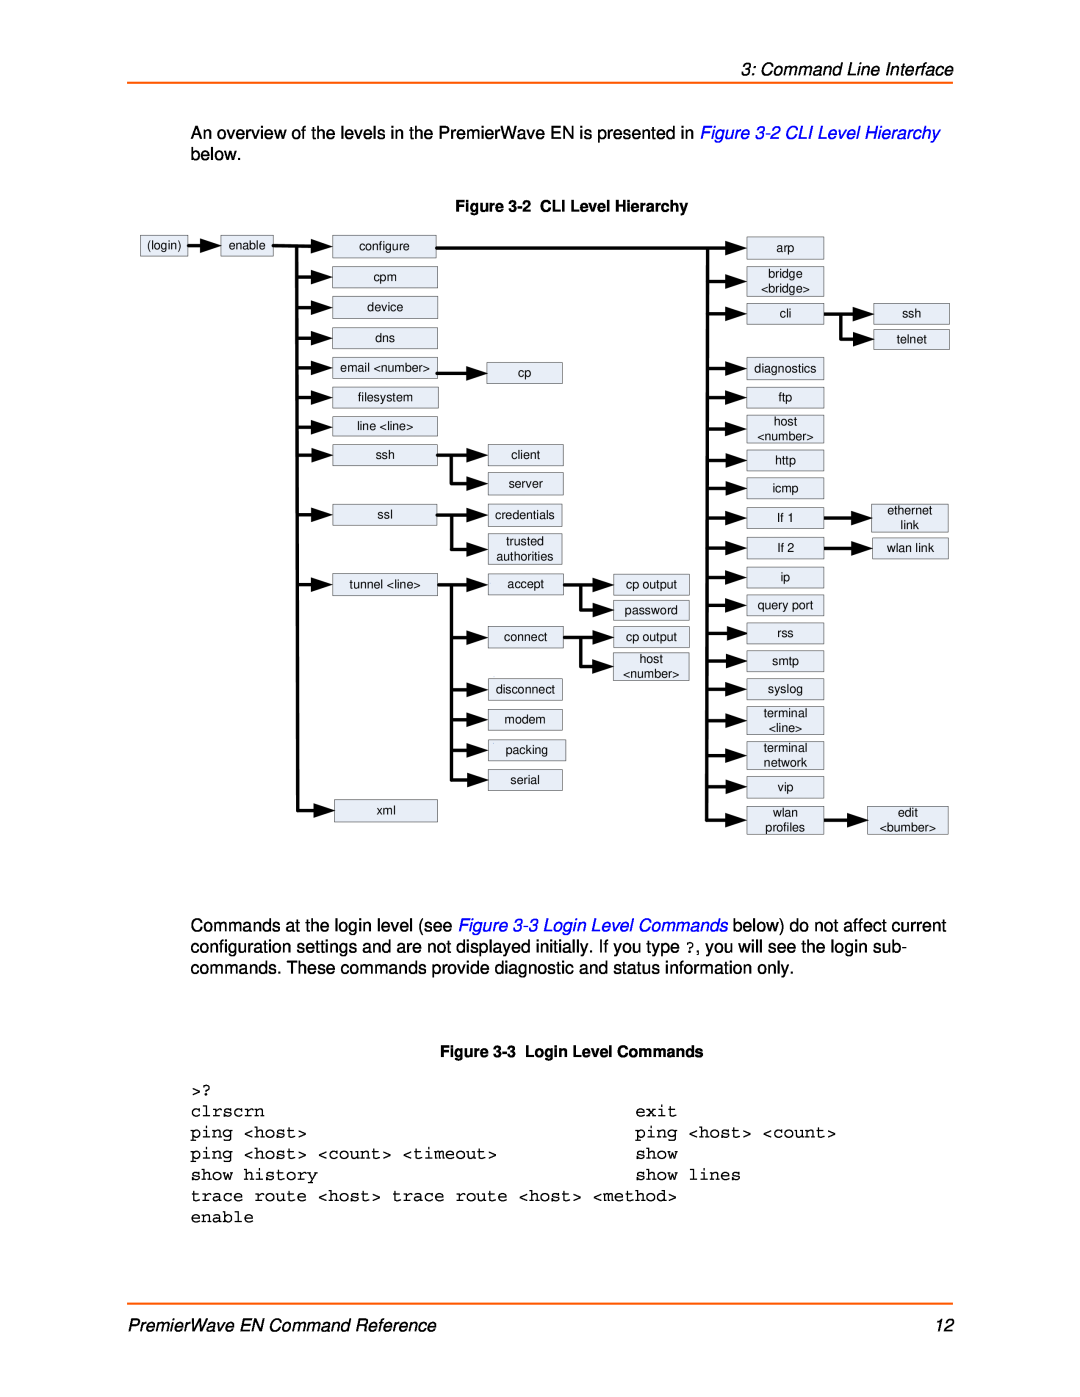 Lantronix 900-581 Command Line Interface, PremierWave EN Command Reference, 2 CLI Level Hierarchy, 3 Login Level Commands 